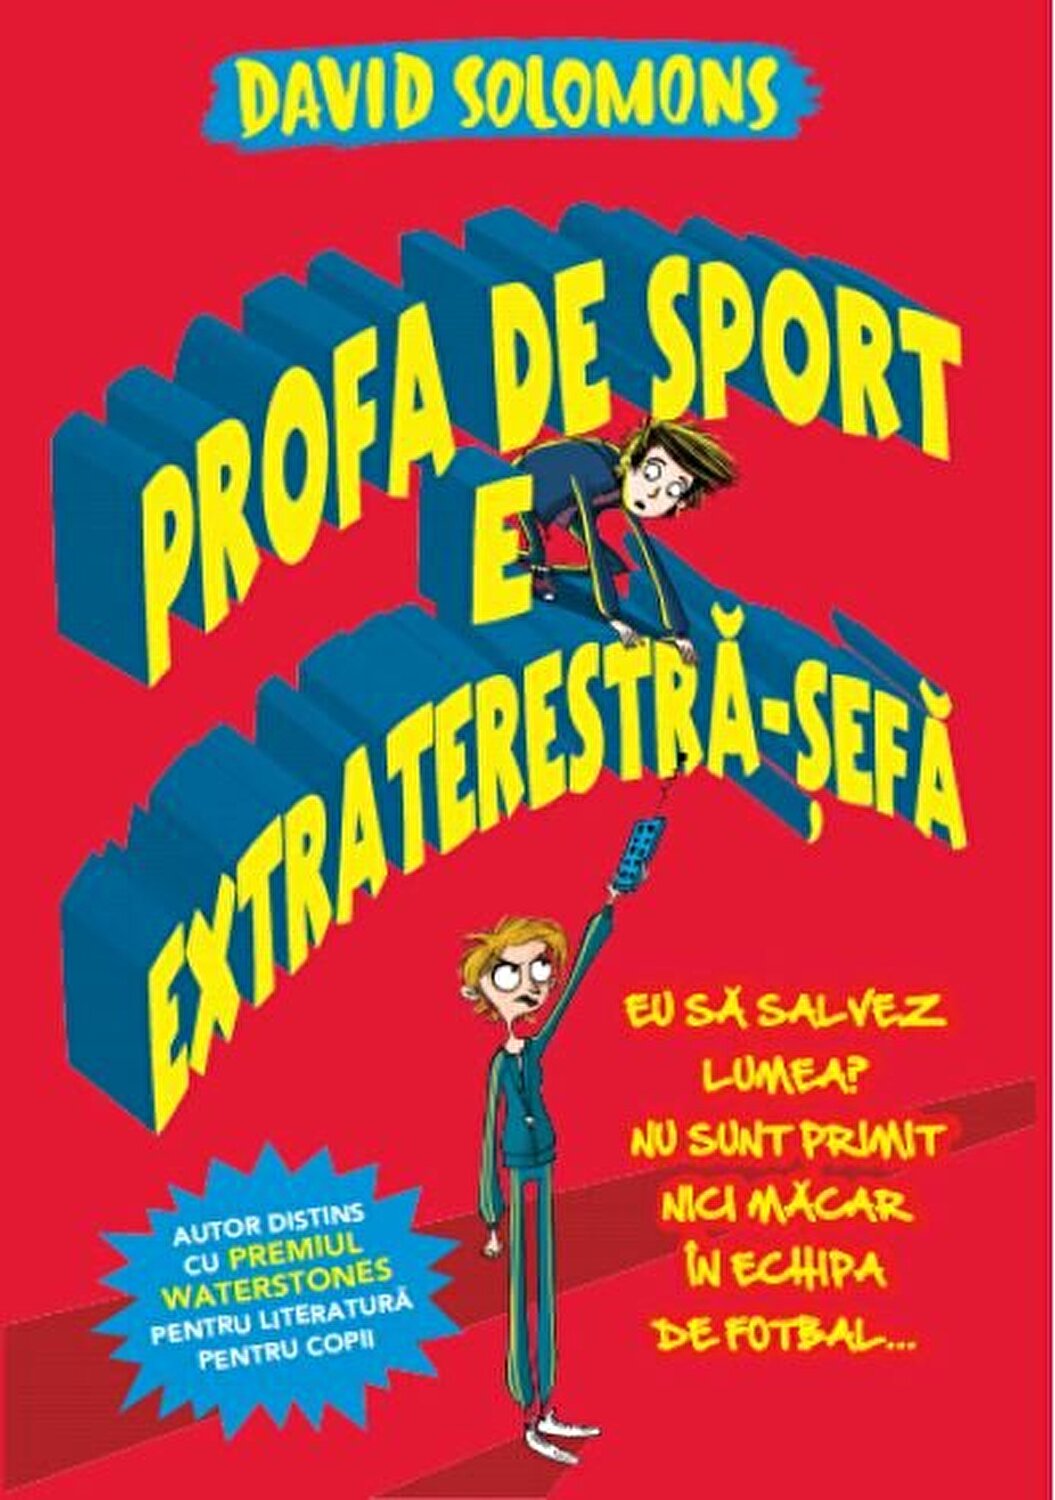 Profa De Sport E Extraterestra-sefa | David Solomons